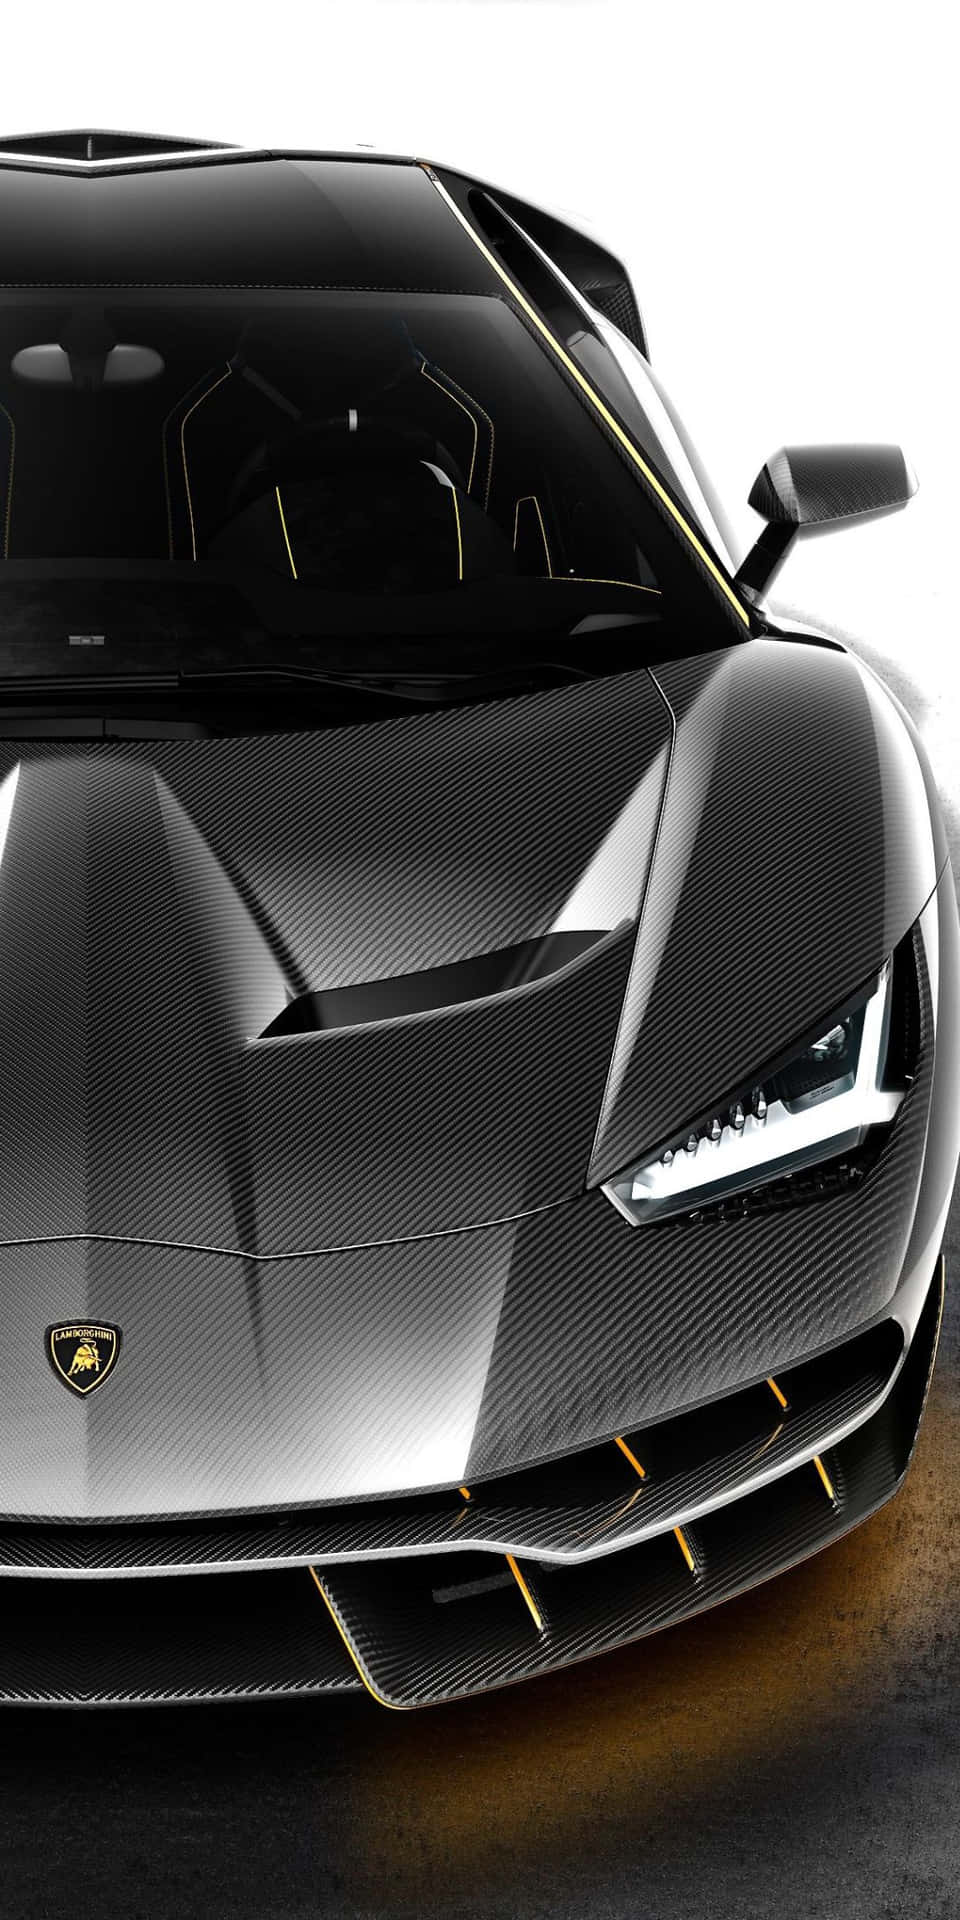 The Sleek Lamborghini To Match Your Pixel 3